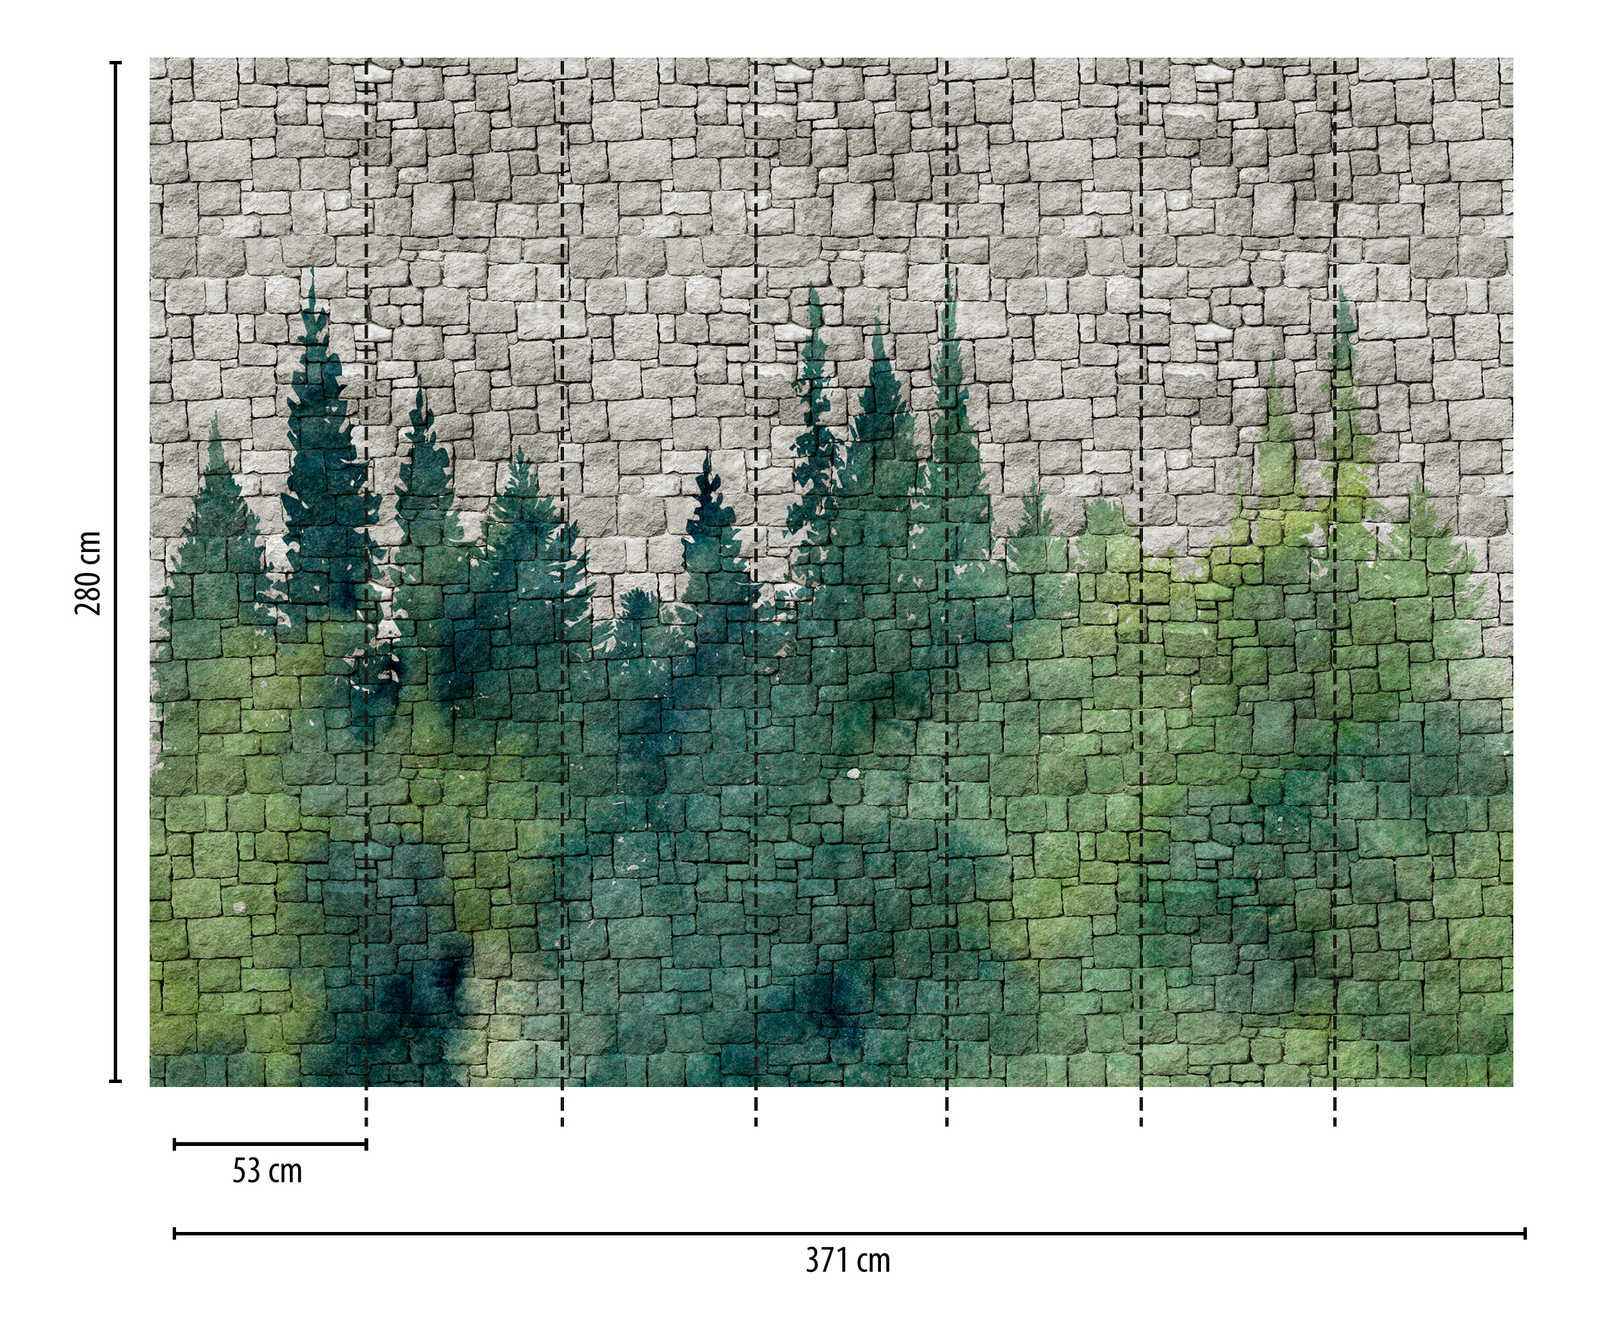             Tapeten-Neuheit | Motivtapete Steinwand Muster & Aquarell Wald
        